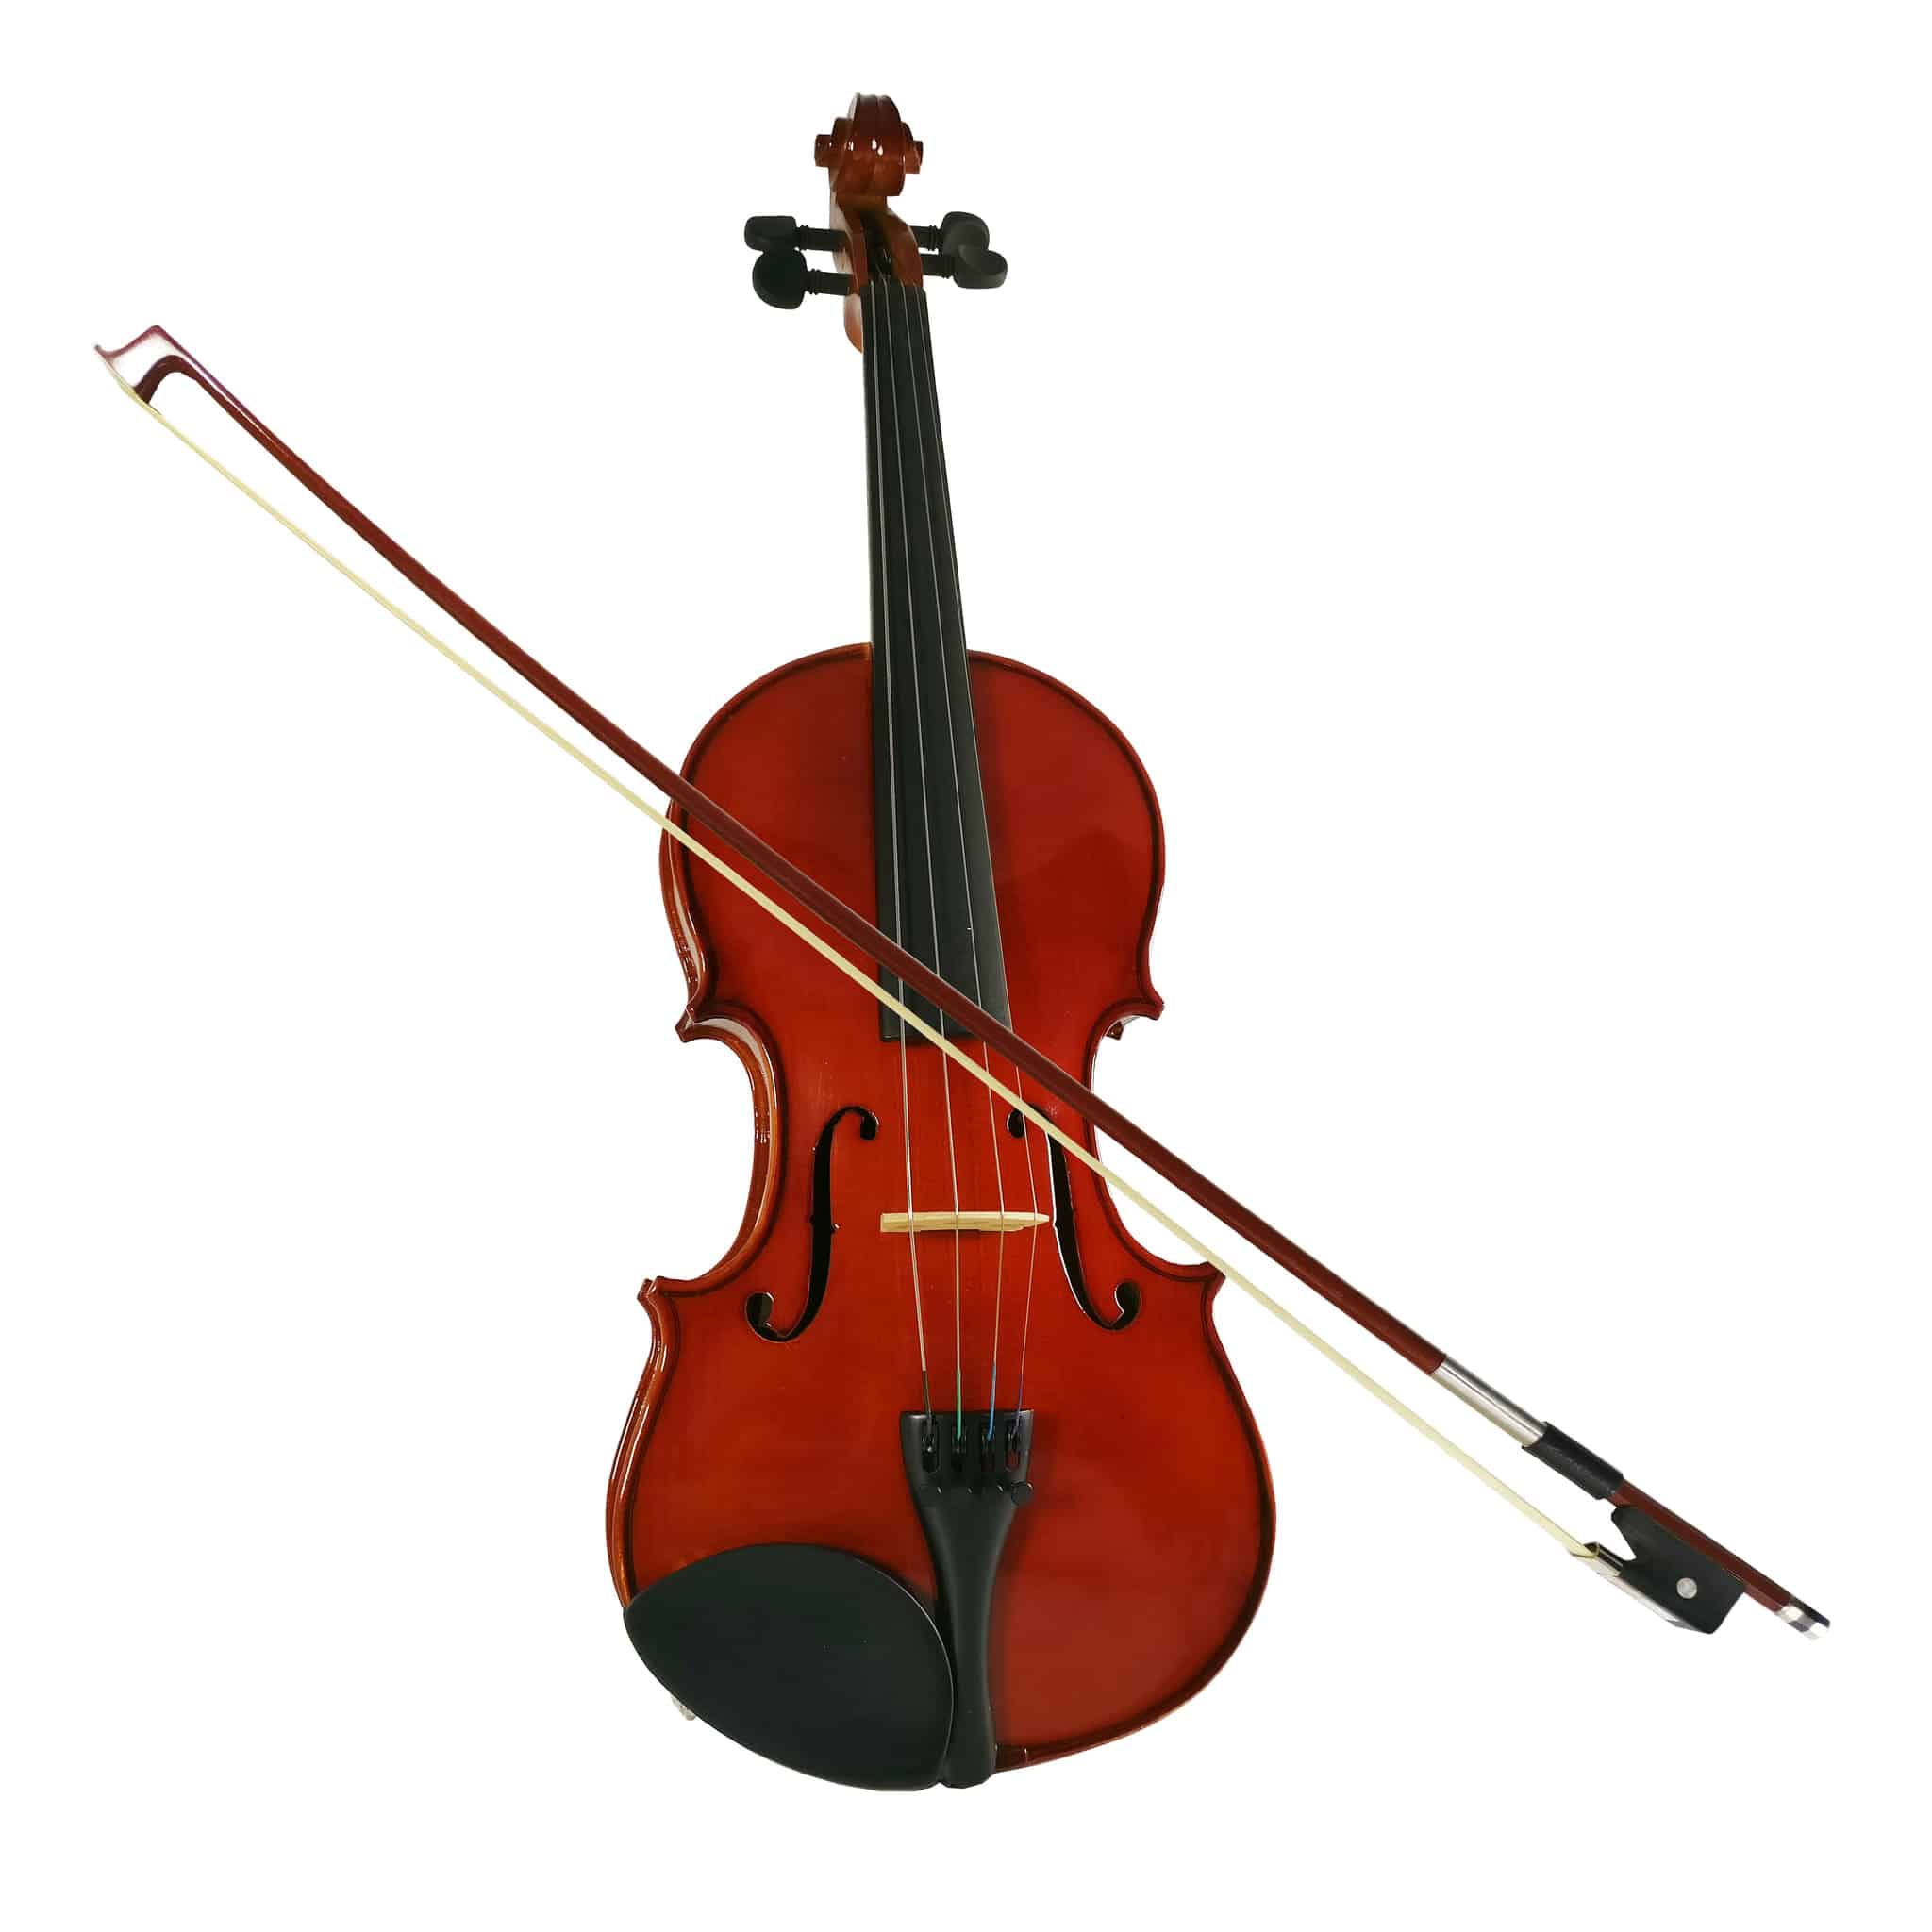 alat musik yang digunakan sebagai pengiring lagu disebut alat musik